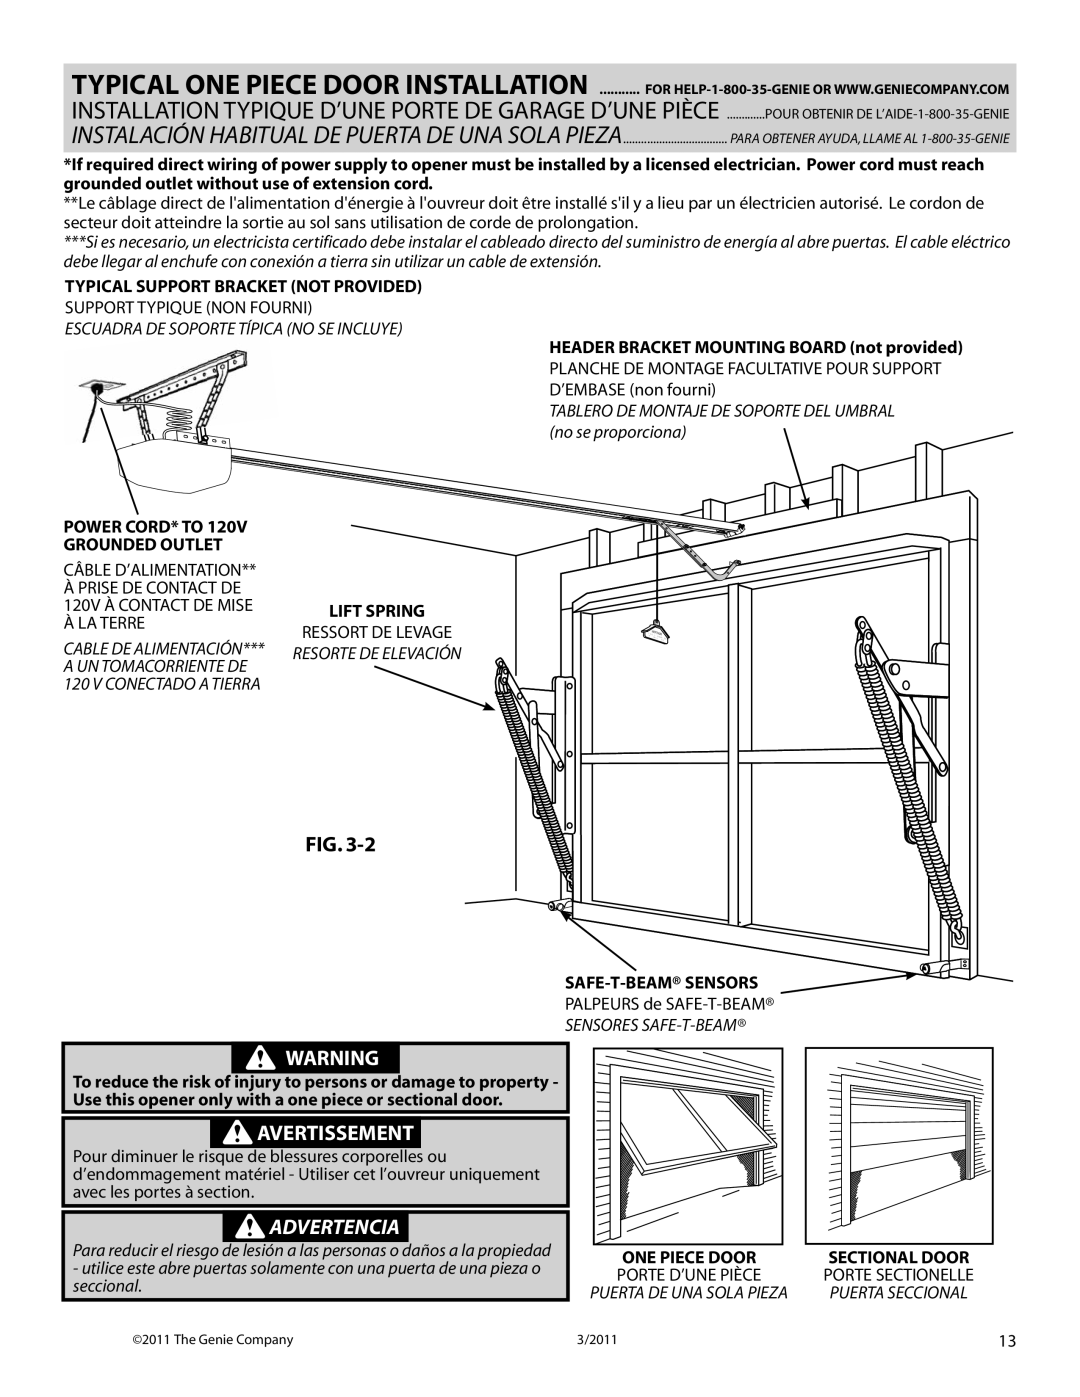 Genie 4042 Typical One Piece Door Installation, Avertissement, Advertencia, Typical Support Bracket Not Provided, Bstr 